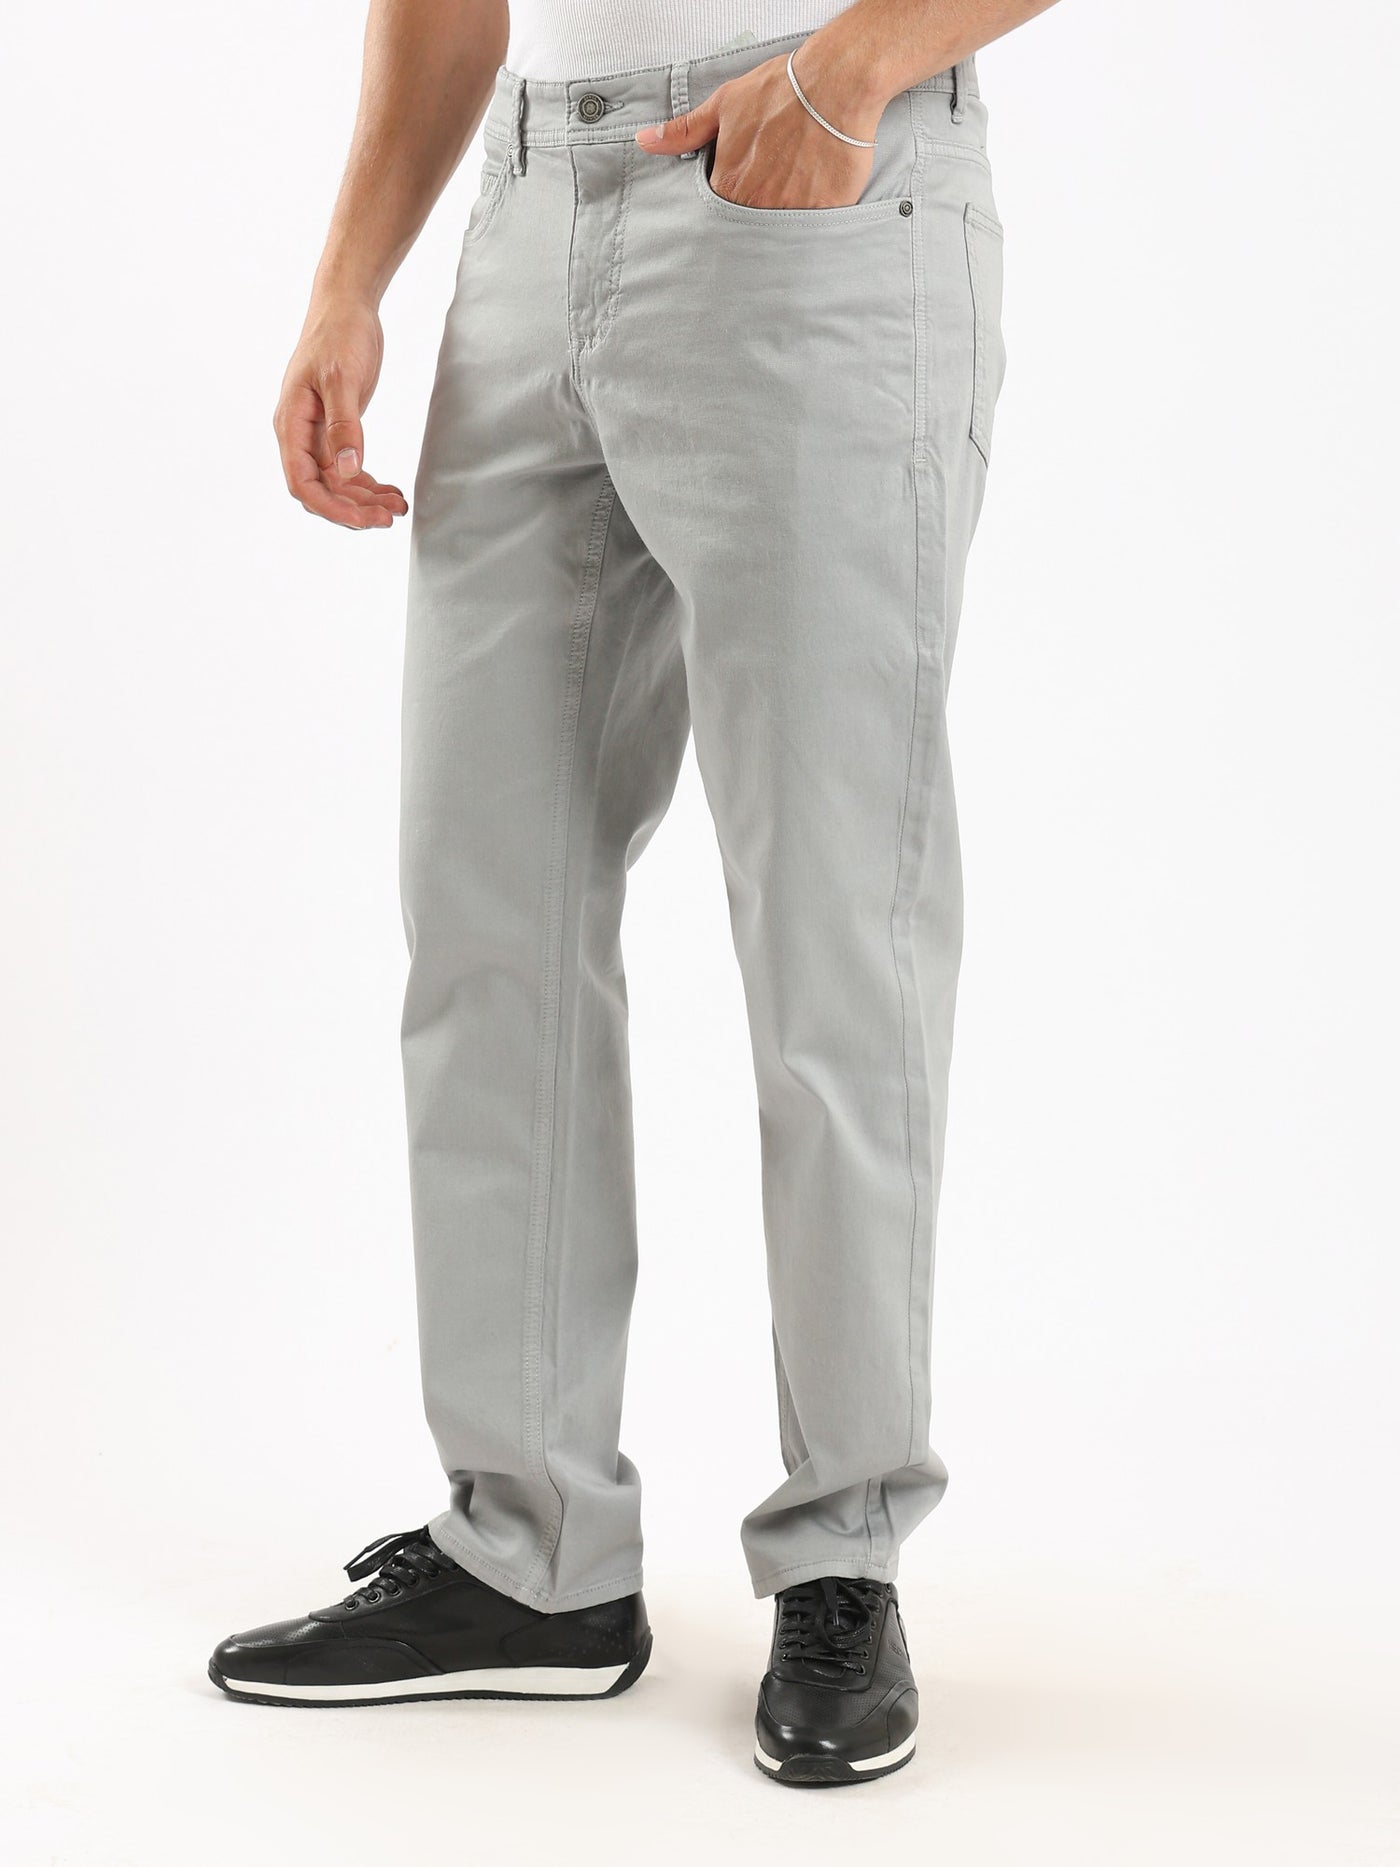 Pants - Belt Loop - With Pockets